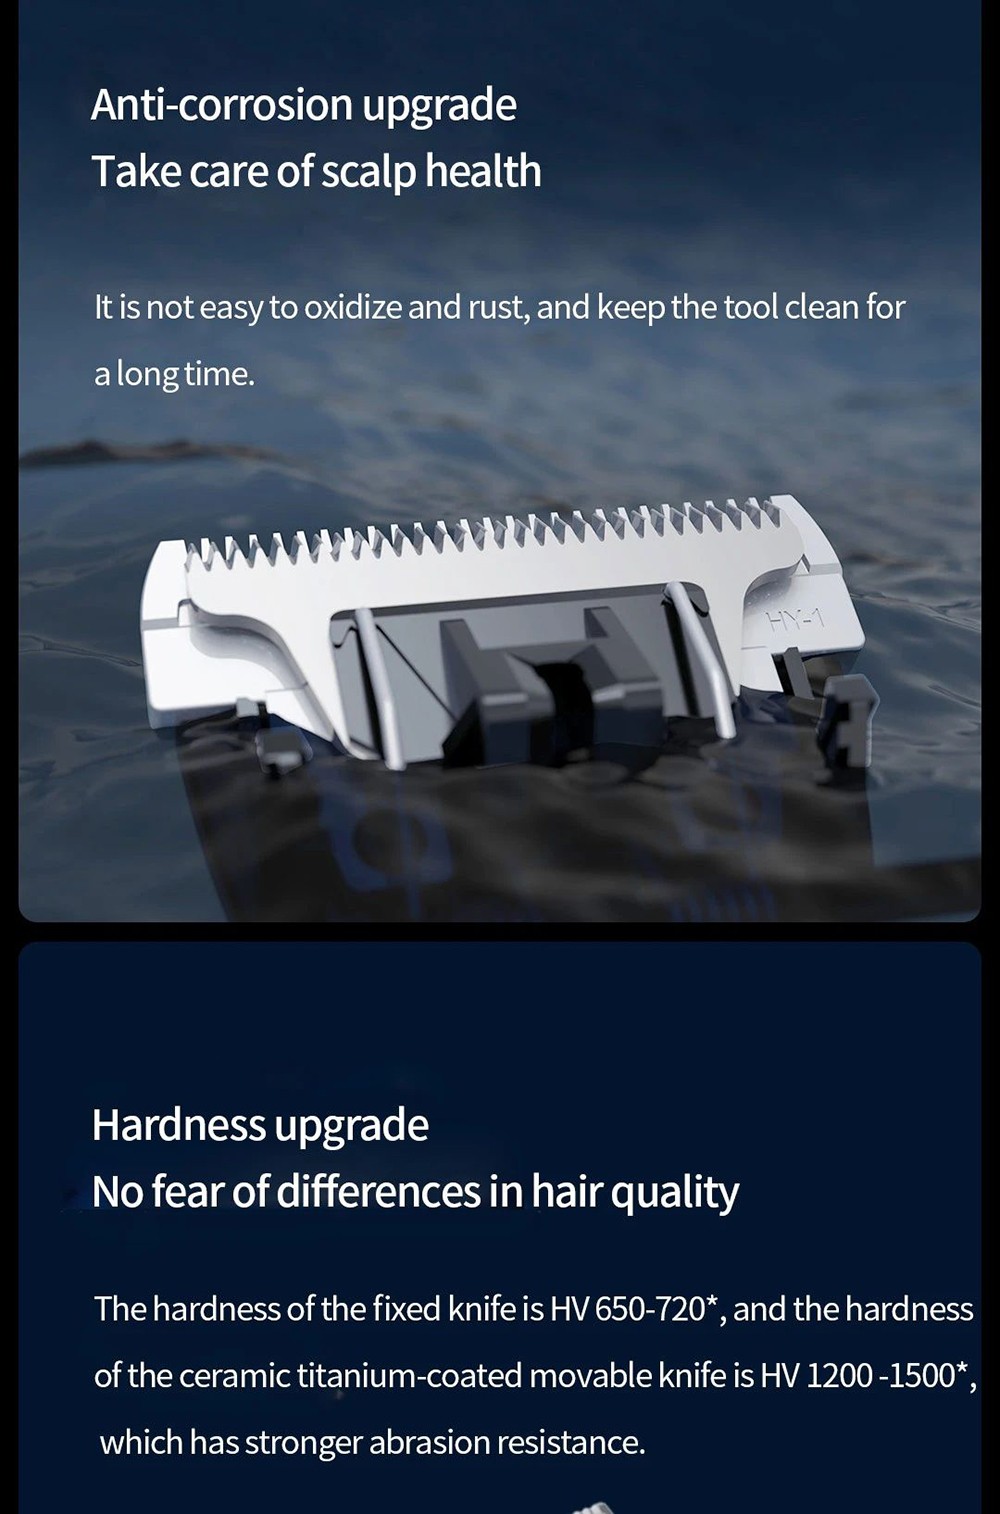 Xiaomi Mijia Elektrische Haarschneidemaschine 0.5-1.7 mm Kurzhaarschnitt lPX7 Wasserdicht 180min Ausdauer